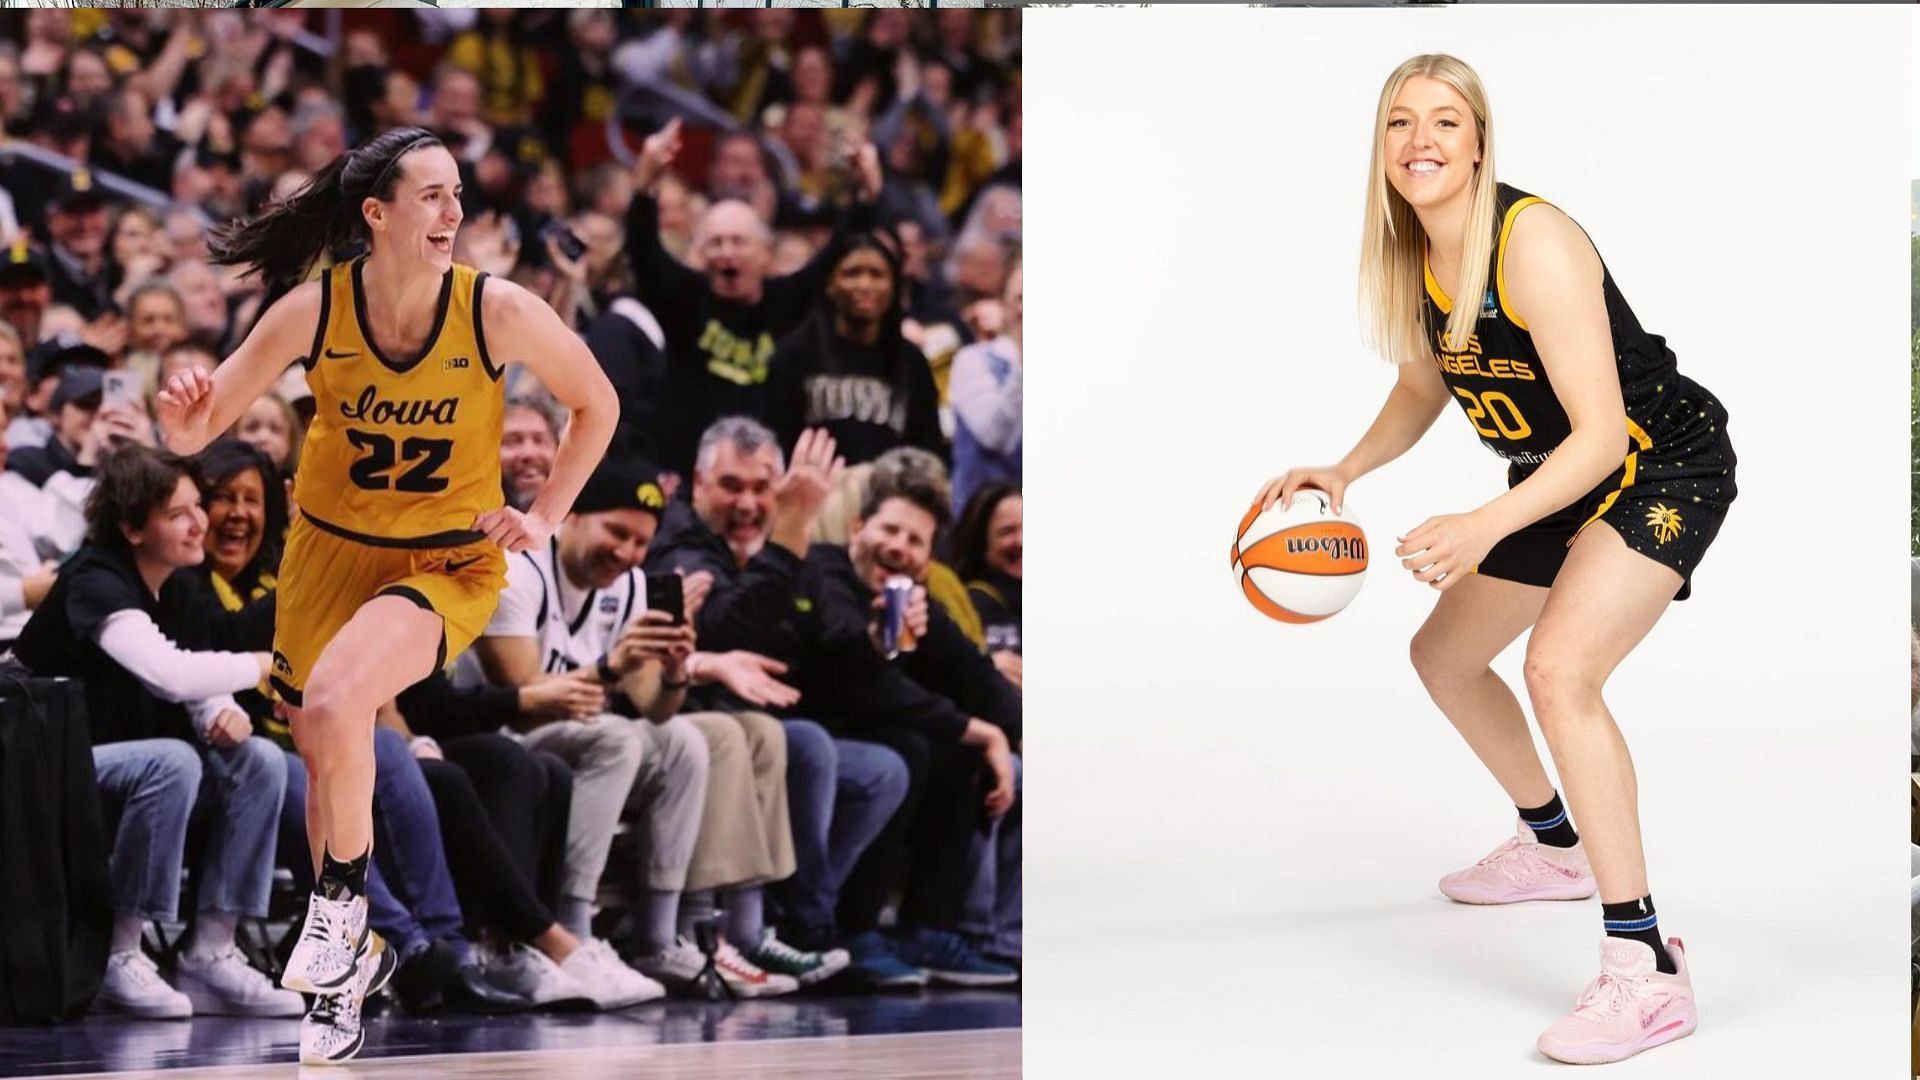 Iowa Hawkeyes basketball star, Caitlin Clark and Monica Czinano